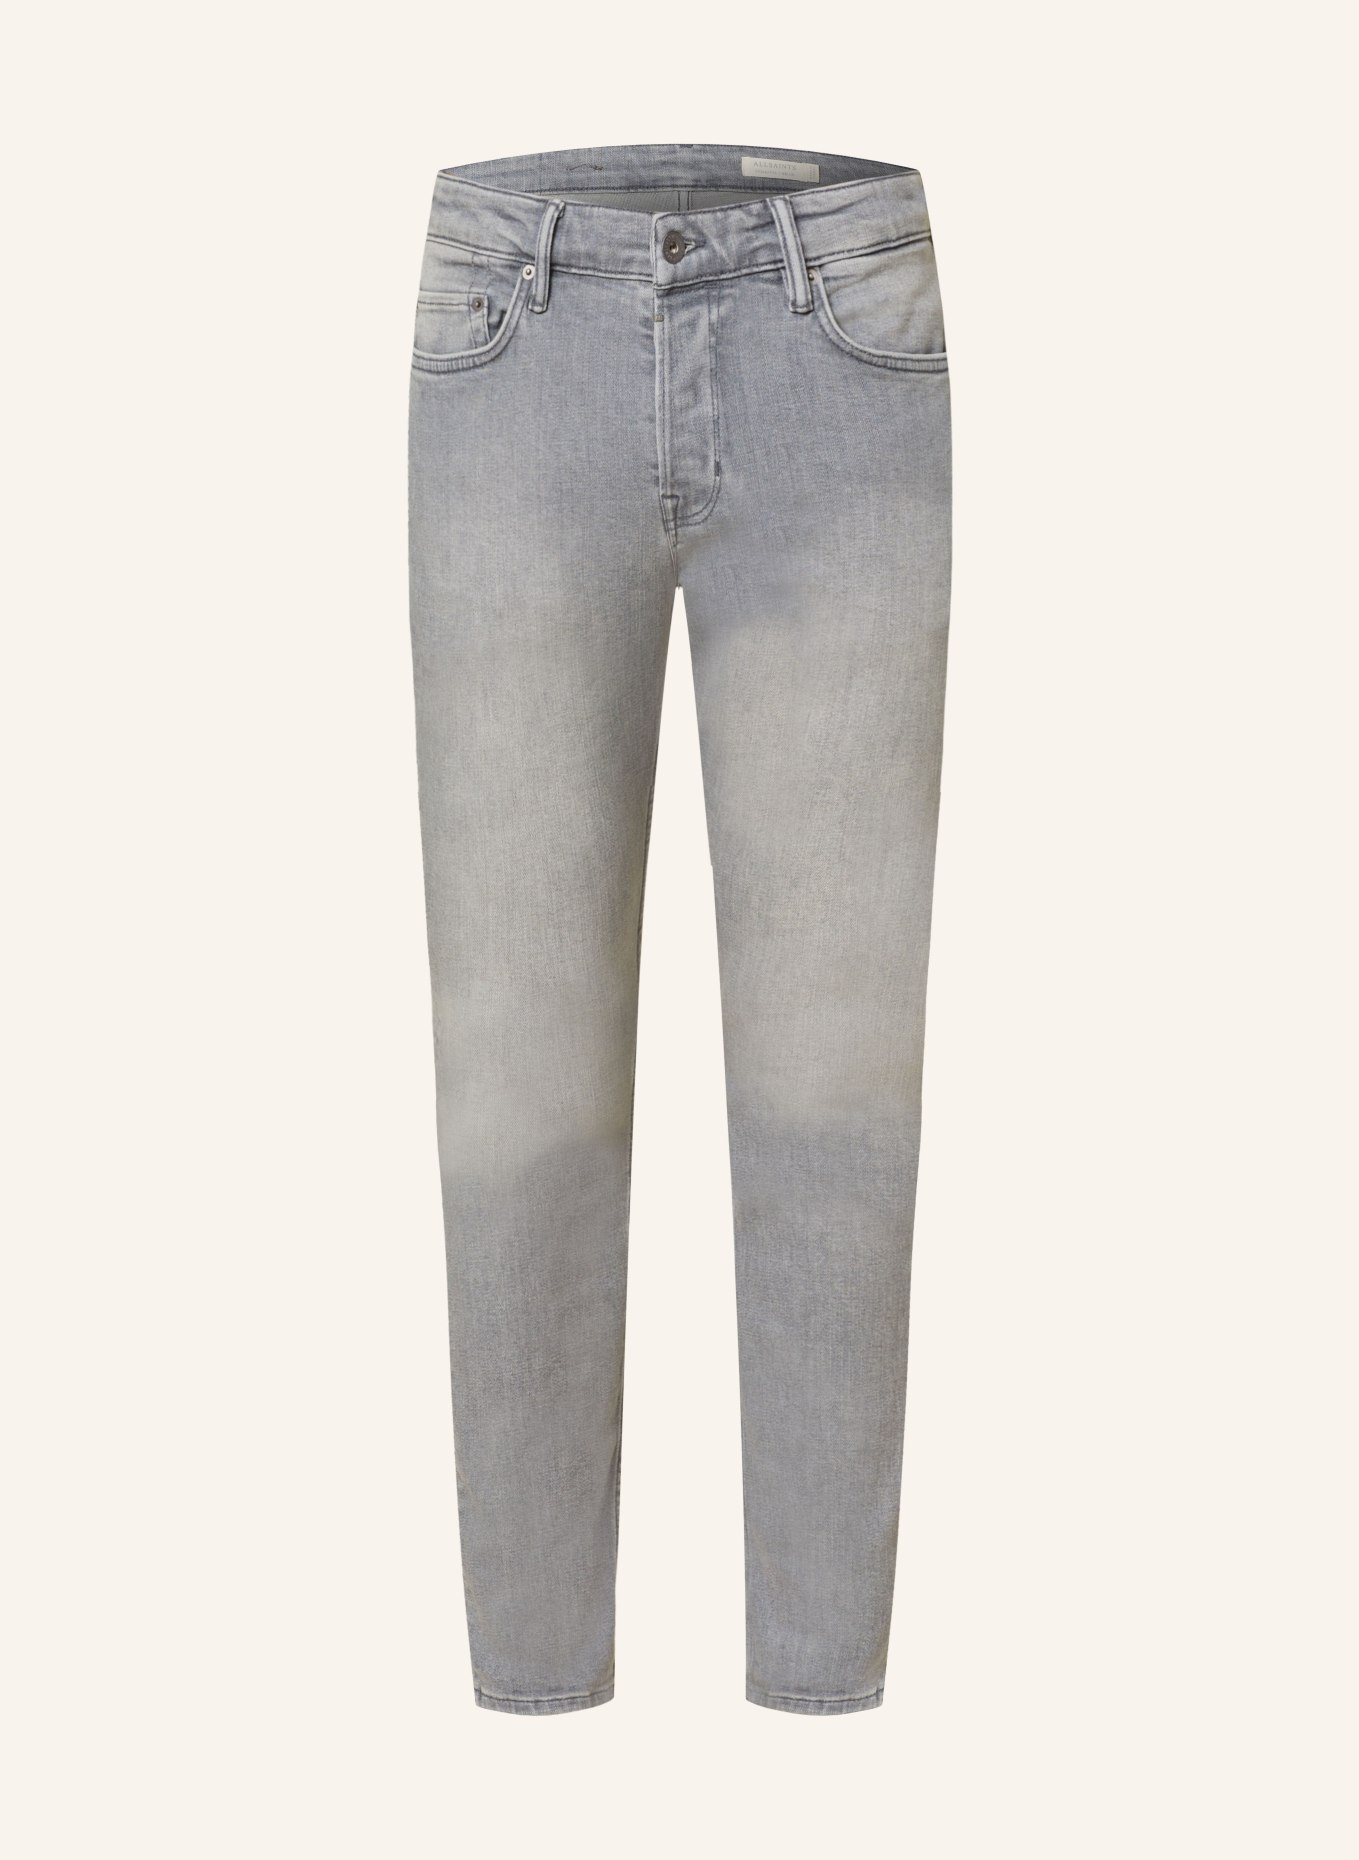 ALLSAINTS Jeans CIGARETTE Skinny Fit, Farbe: 7 GREY (Bild 1)